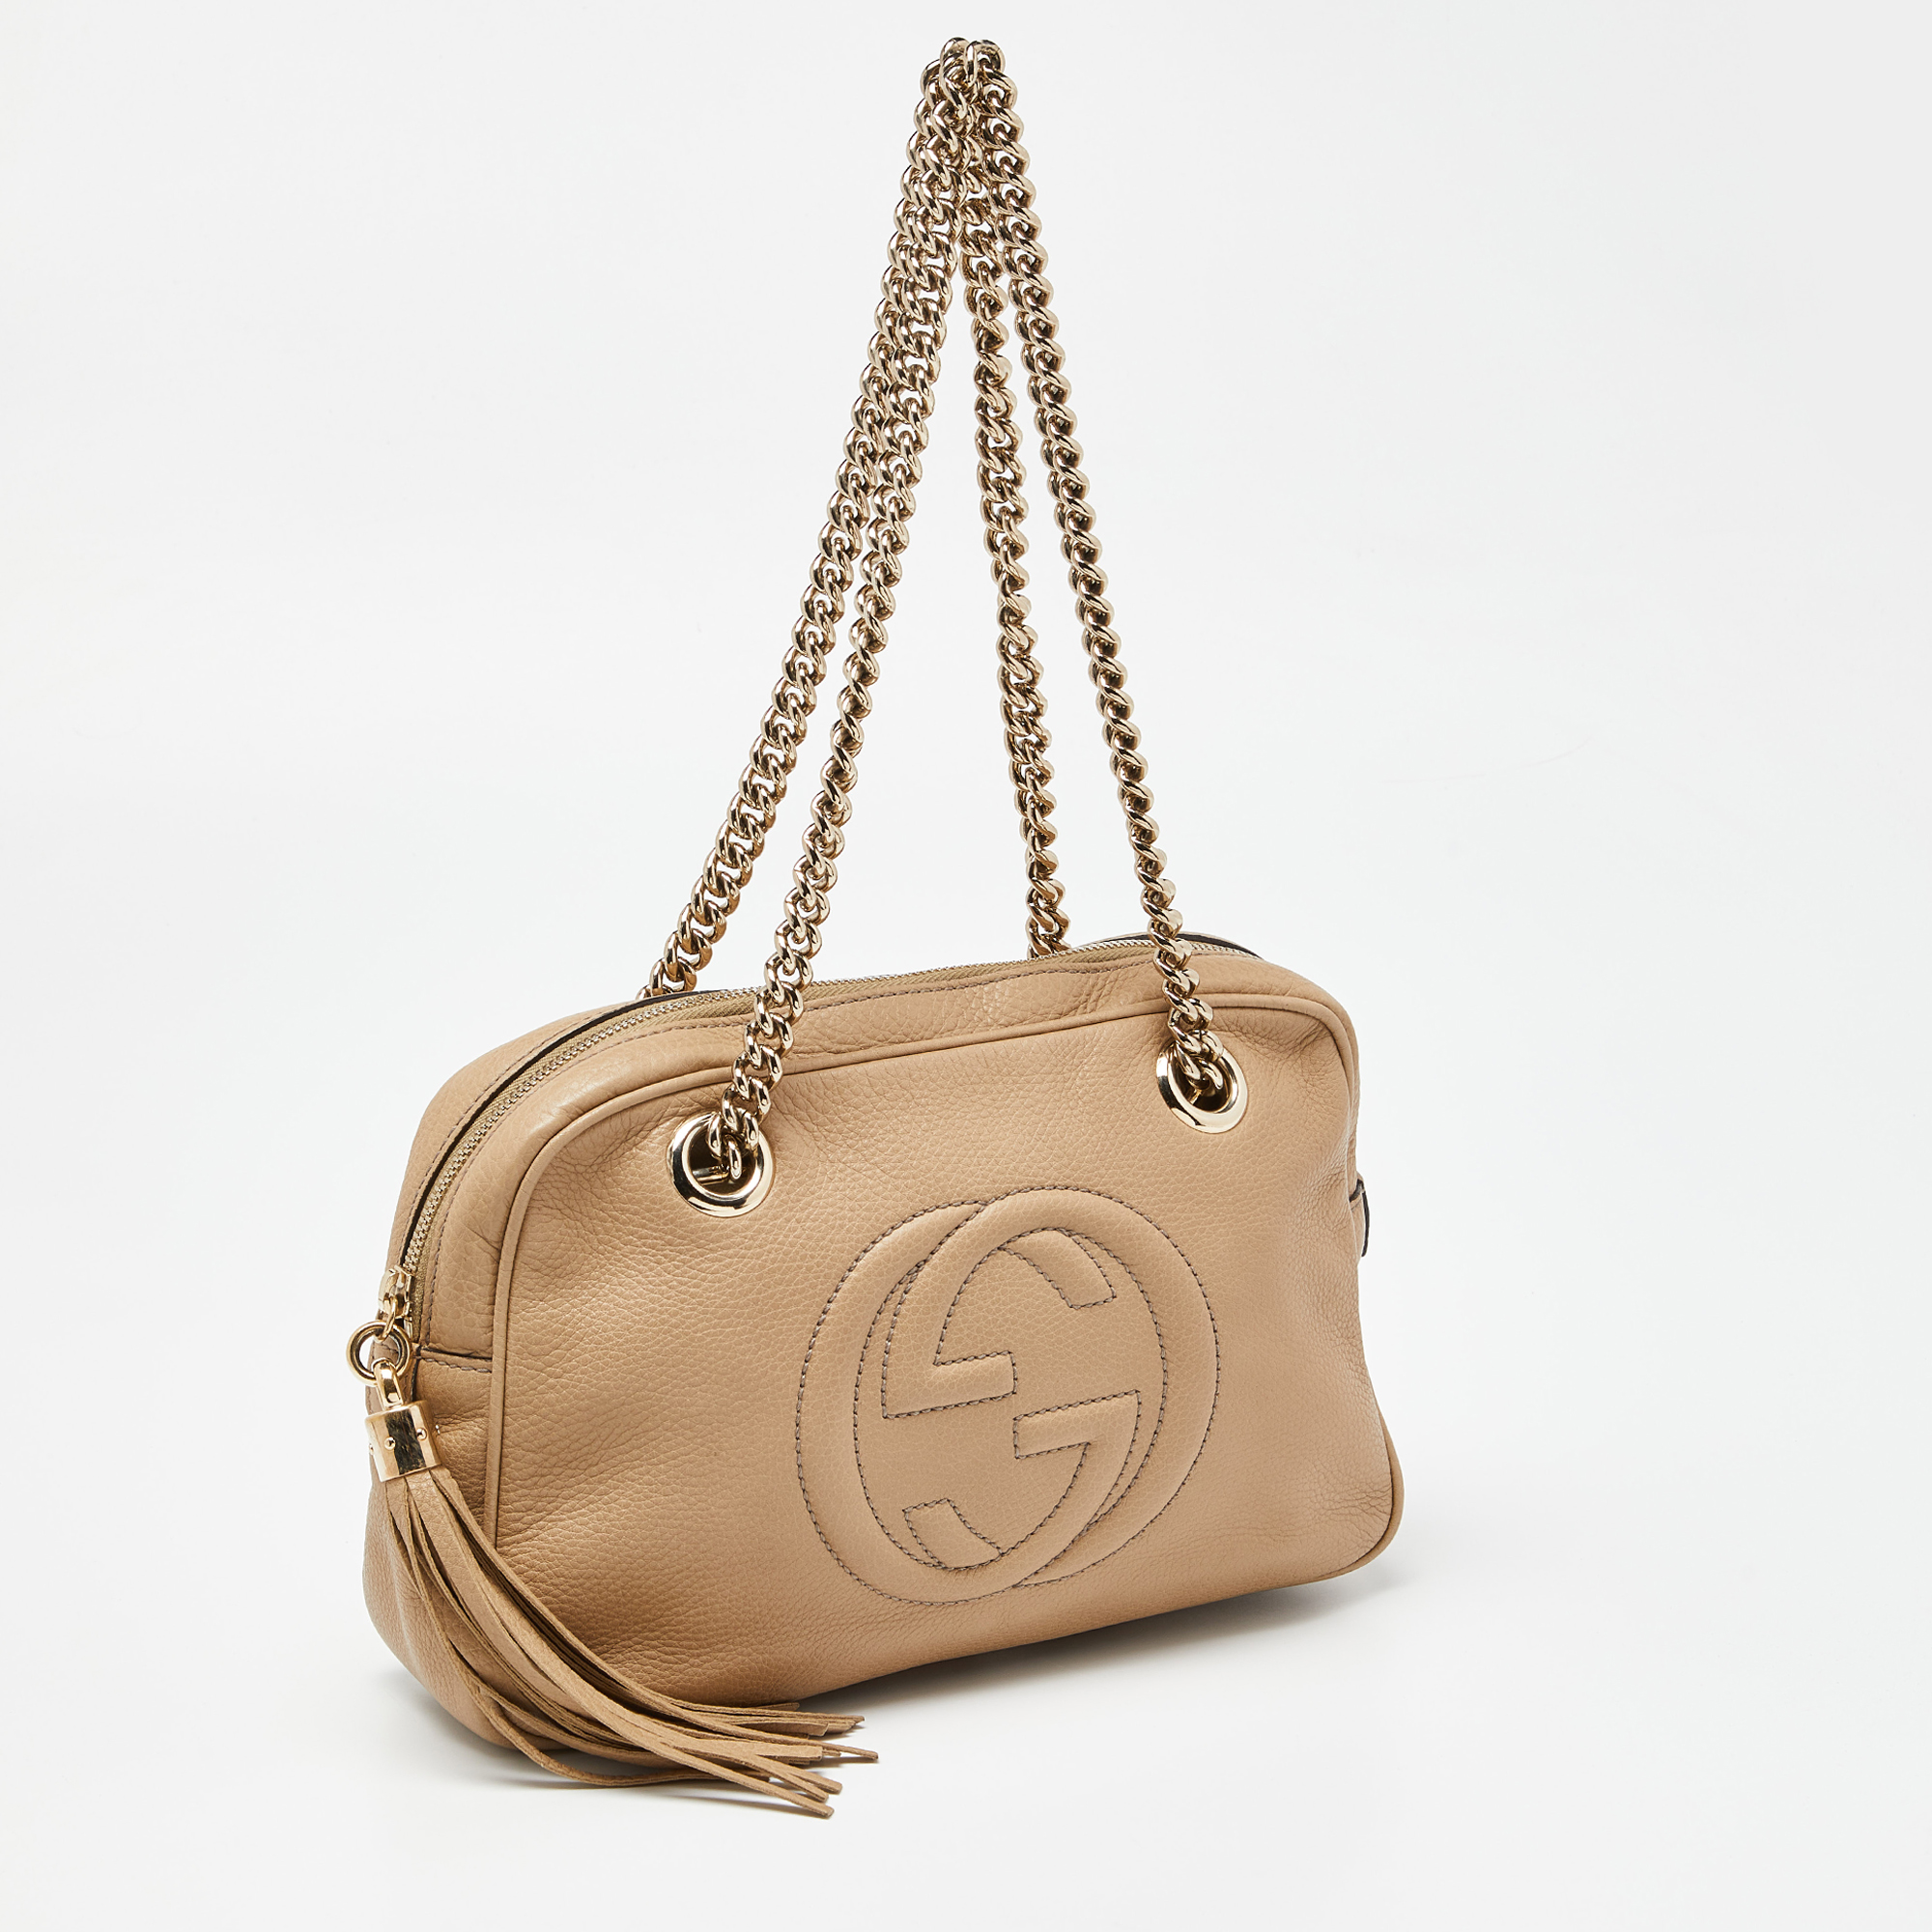 Gucci Beige Leather Medium Soho Chain Shoulder Bag